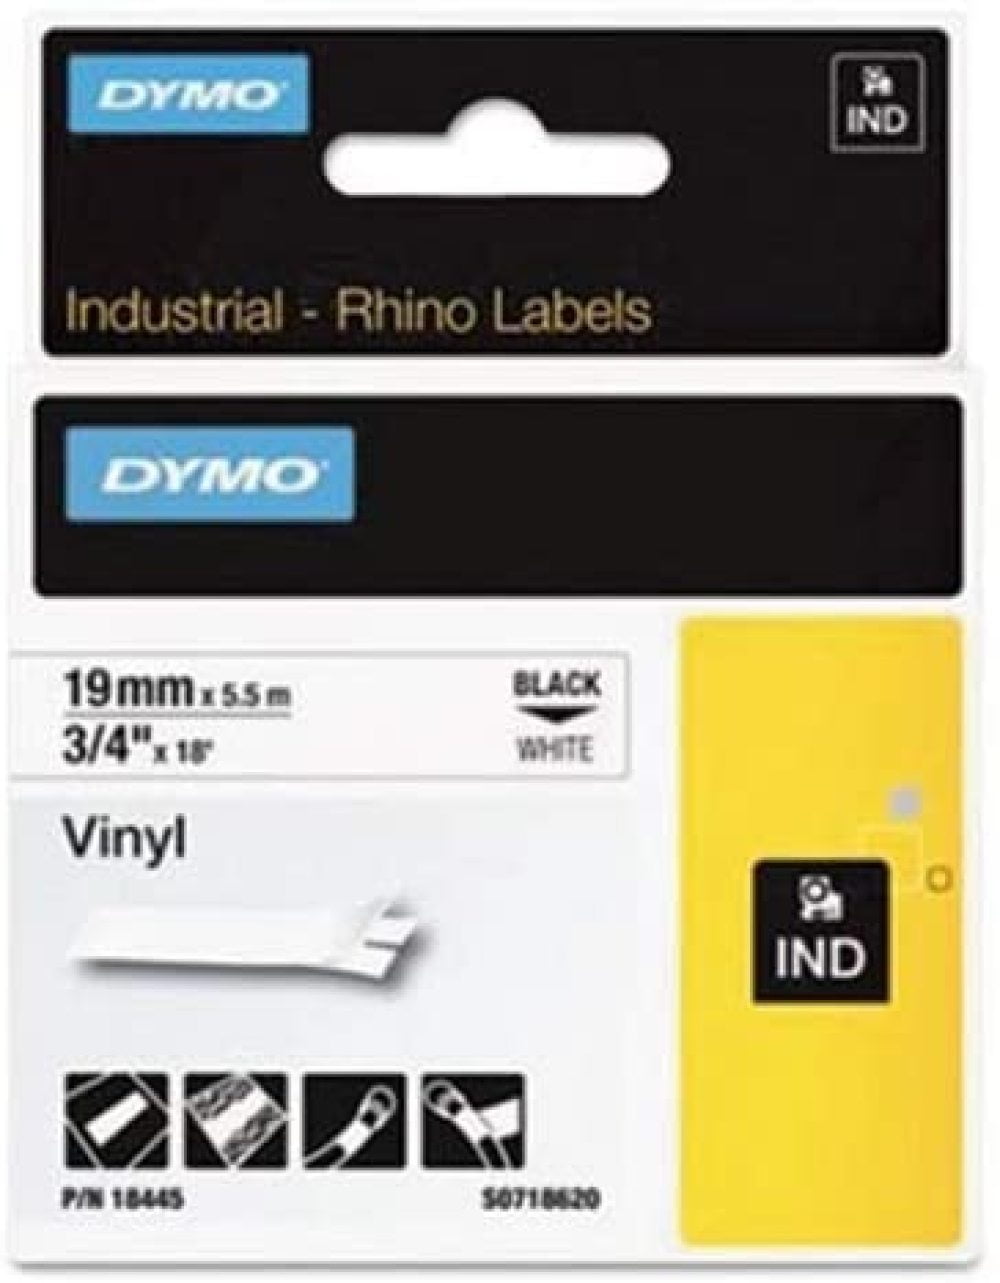 DYMO Rhino Permanent Vinyl Industrial Label Tape 3/4" x 18 ft White/Black Print 